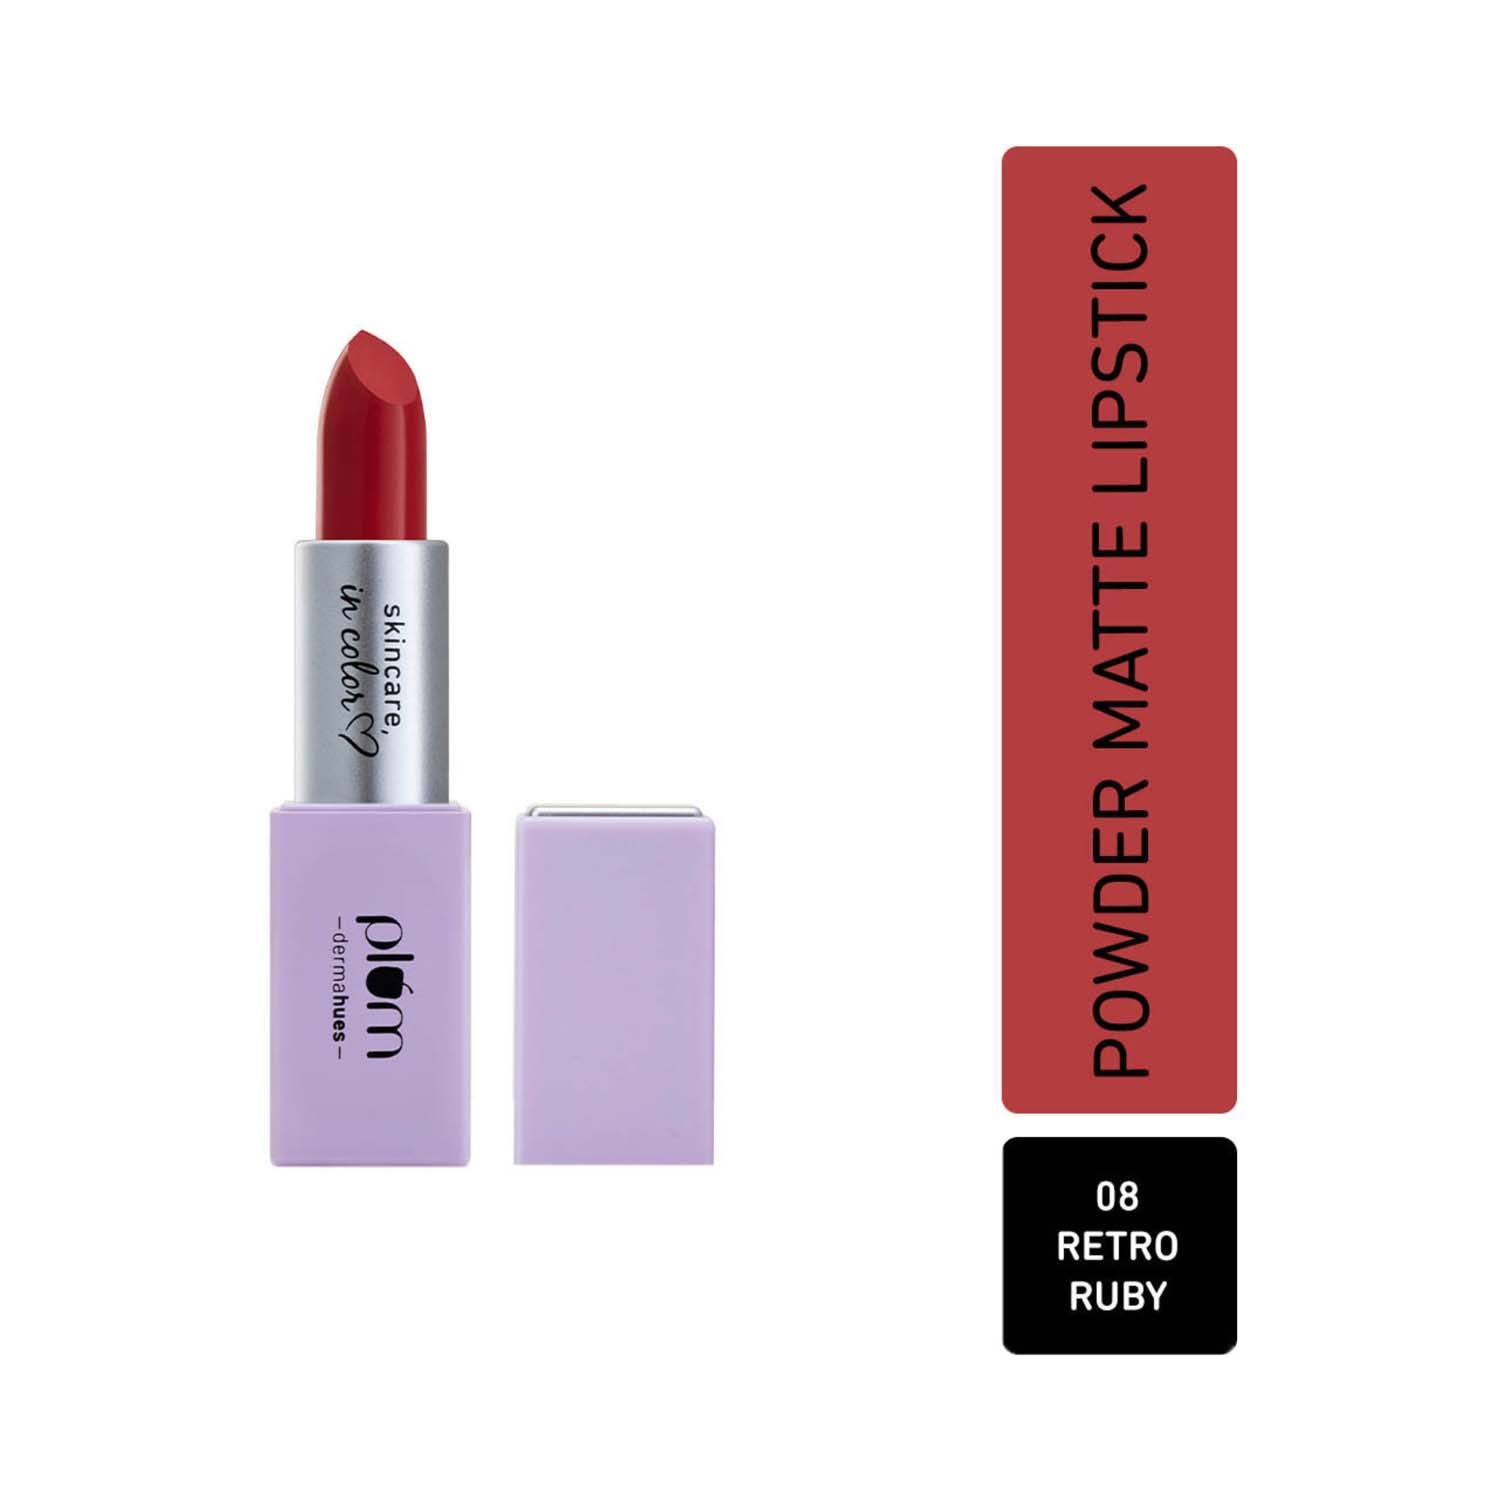 Plum | Plum Velvet Haze Powder Matte Lipstick - 08 Retro Ruby (4.2g)